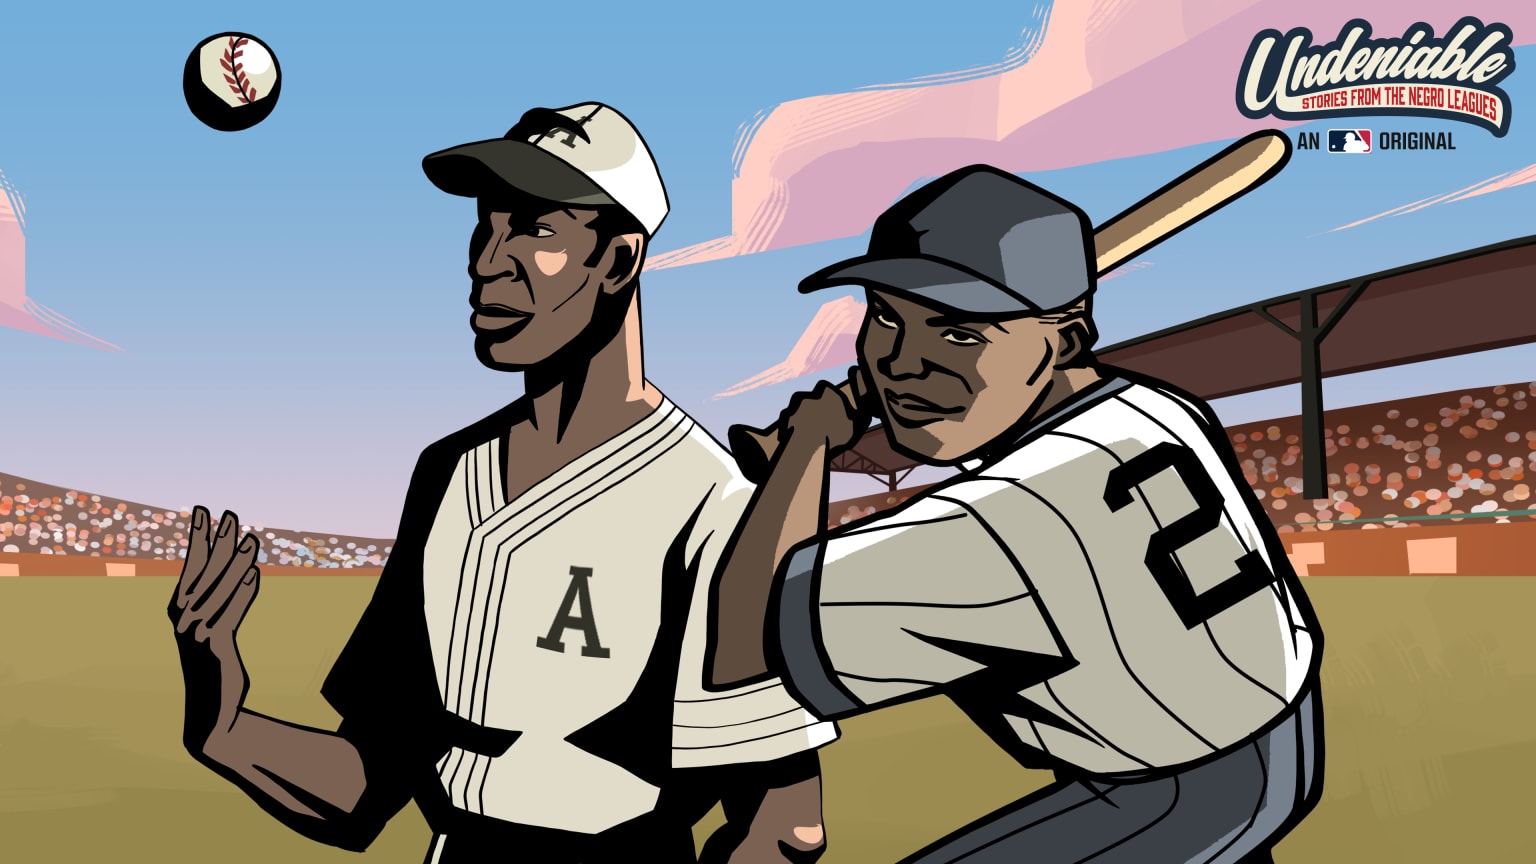 A comic image of two Black ballplayers